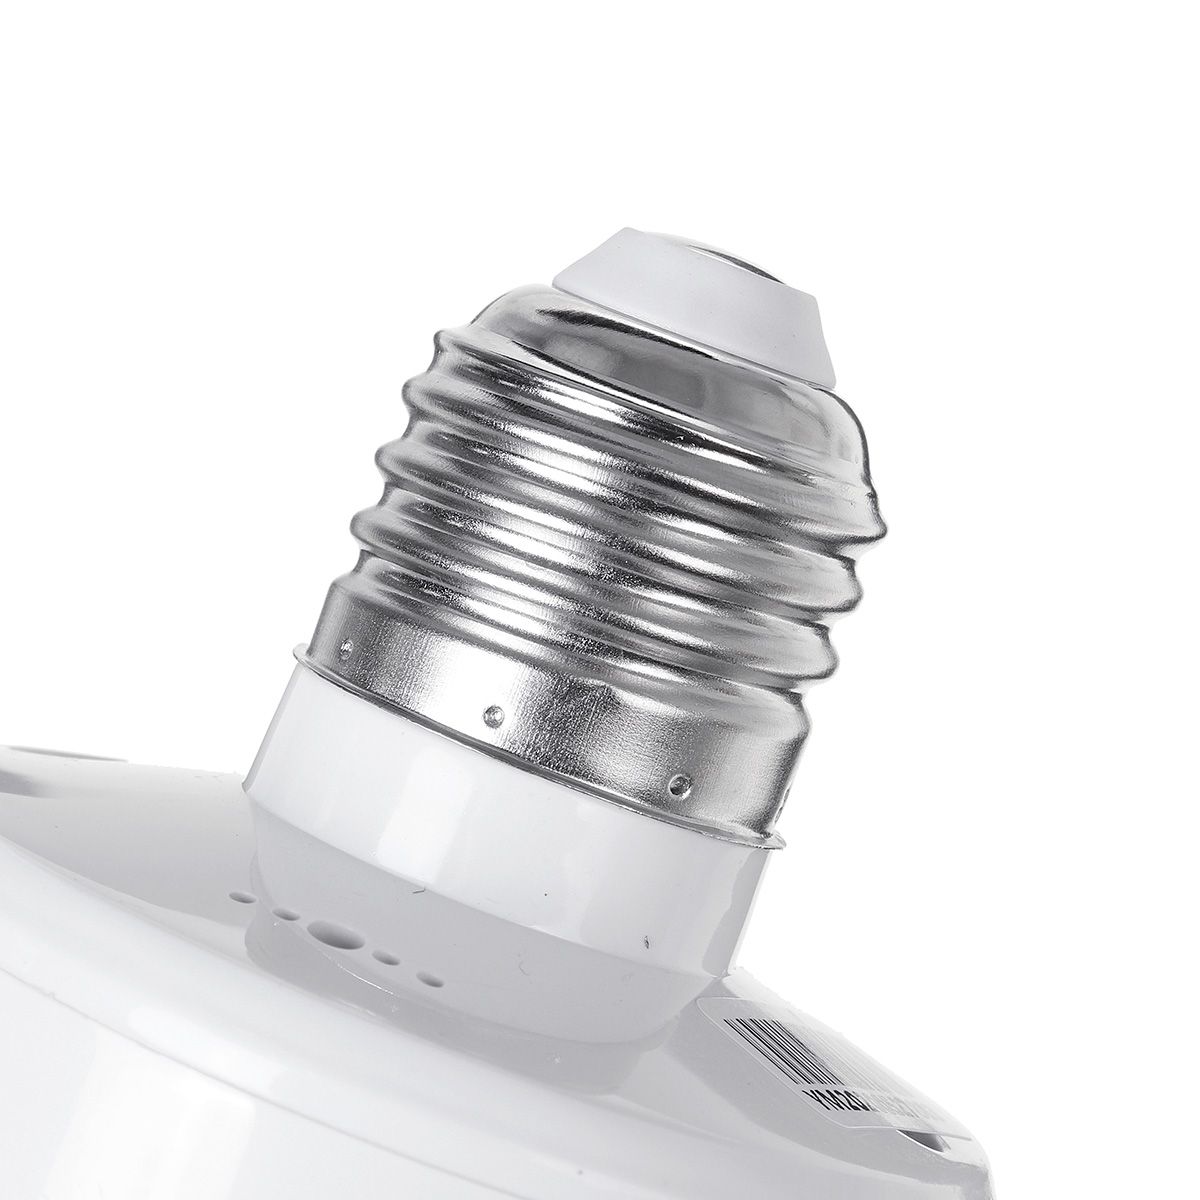 E27-Bulb-Adapter-Screw-Wireless-Remote-Control-Light-Lampholder-Cap-Socket-for-UV-Germicidal-Lamp-11-1683076